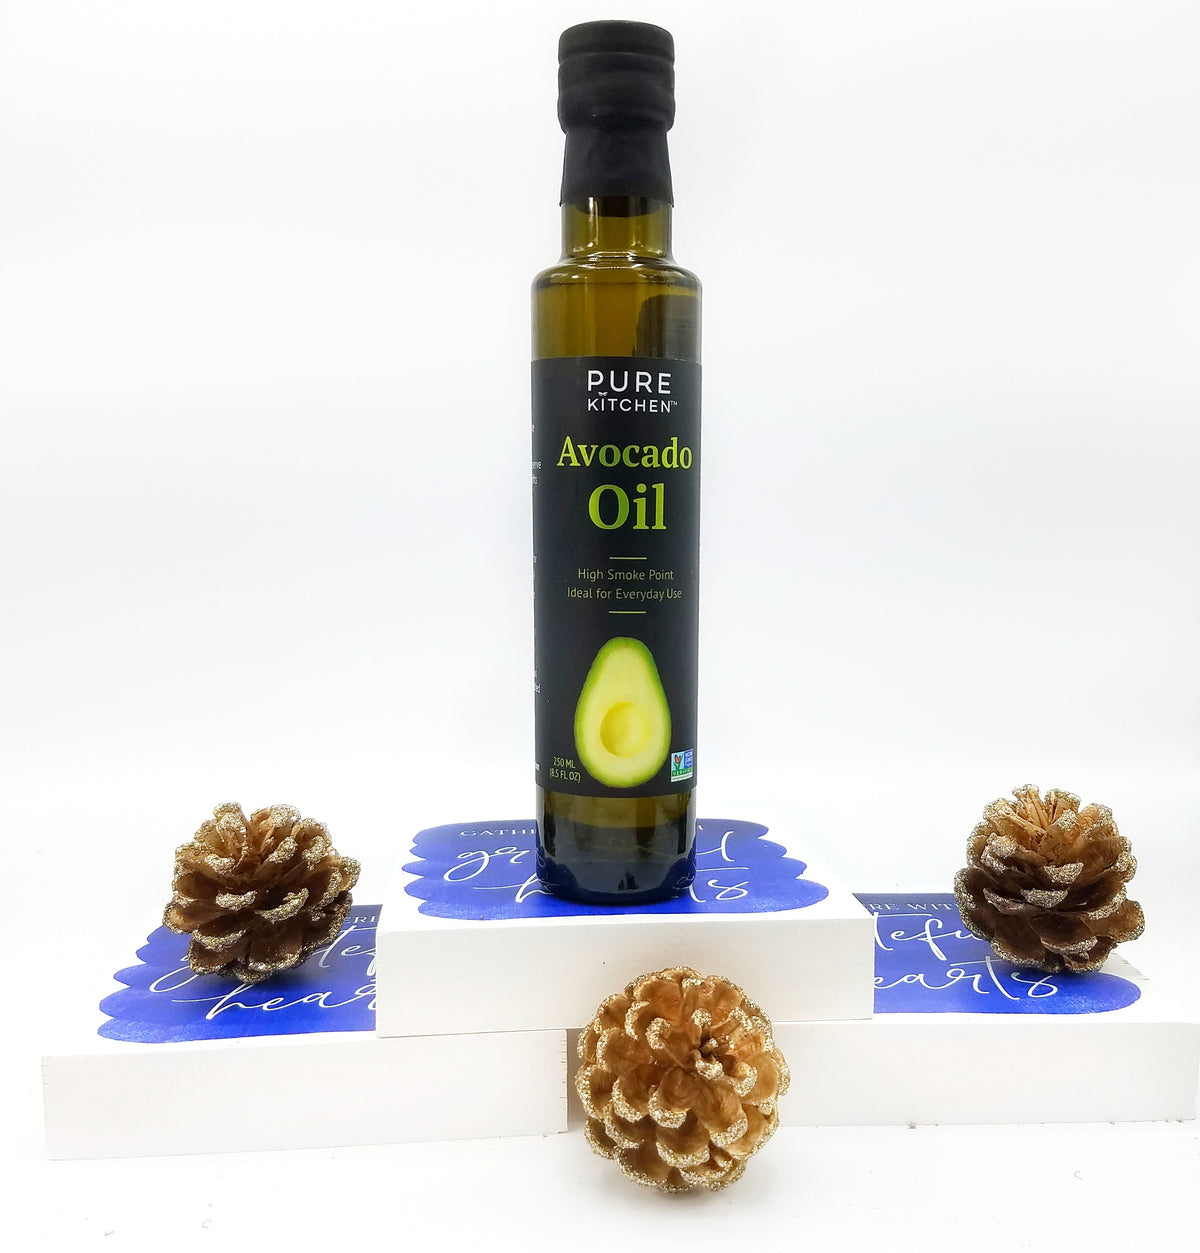 Olivari 100% Pure Avocado Oil PET Bottle (1L) - Sam's Club